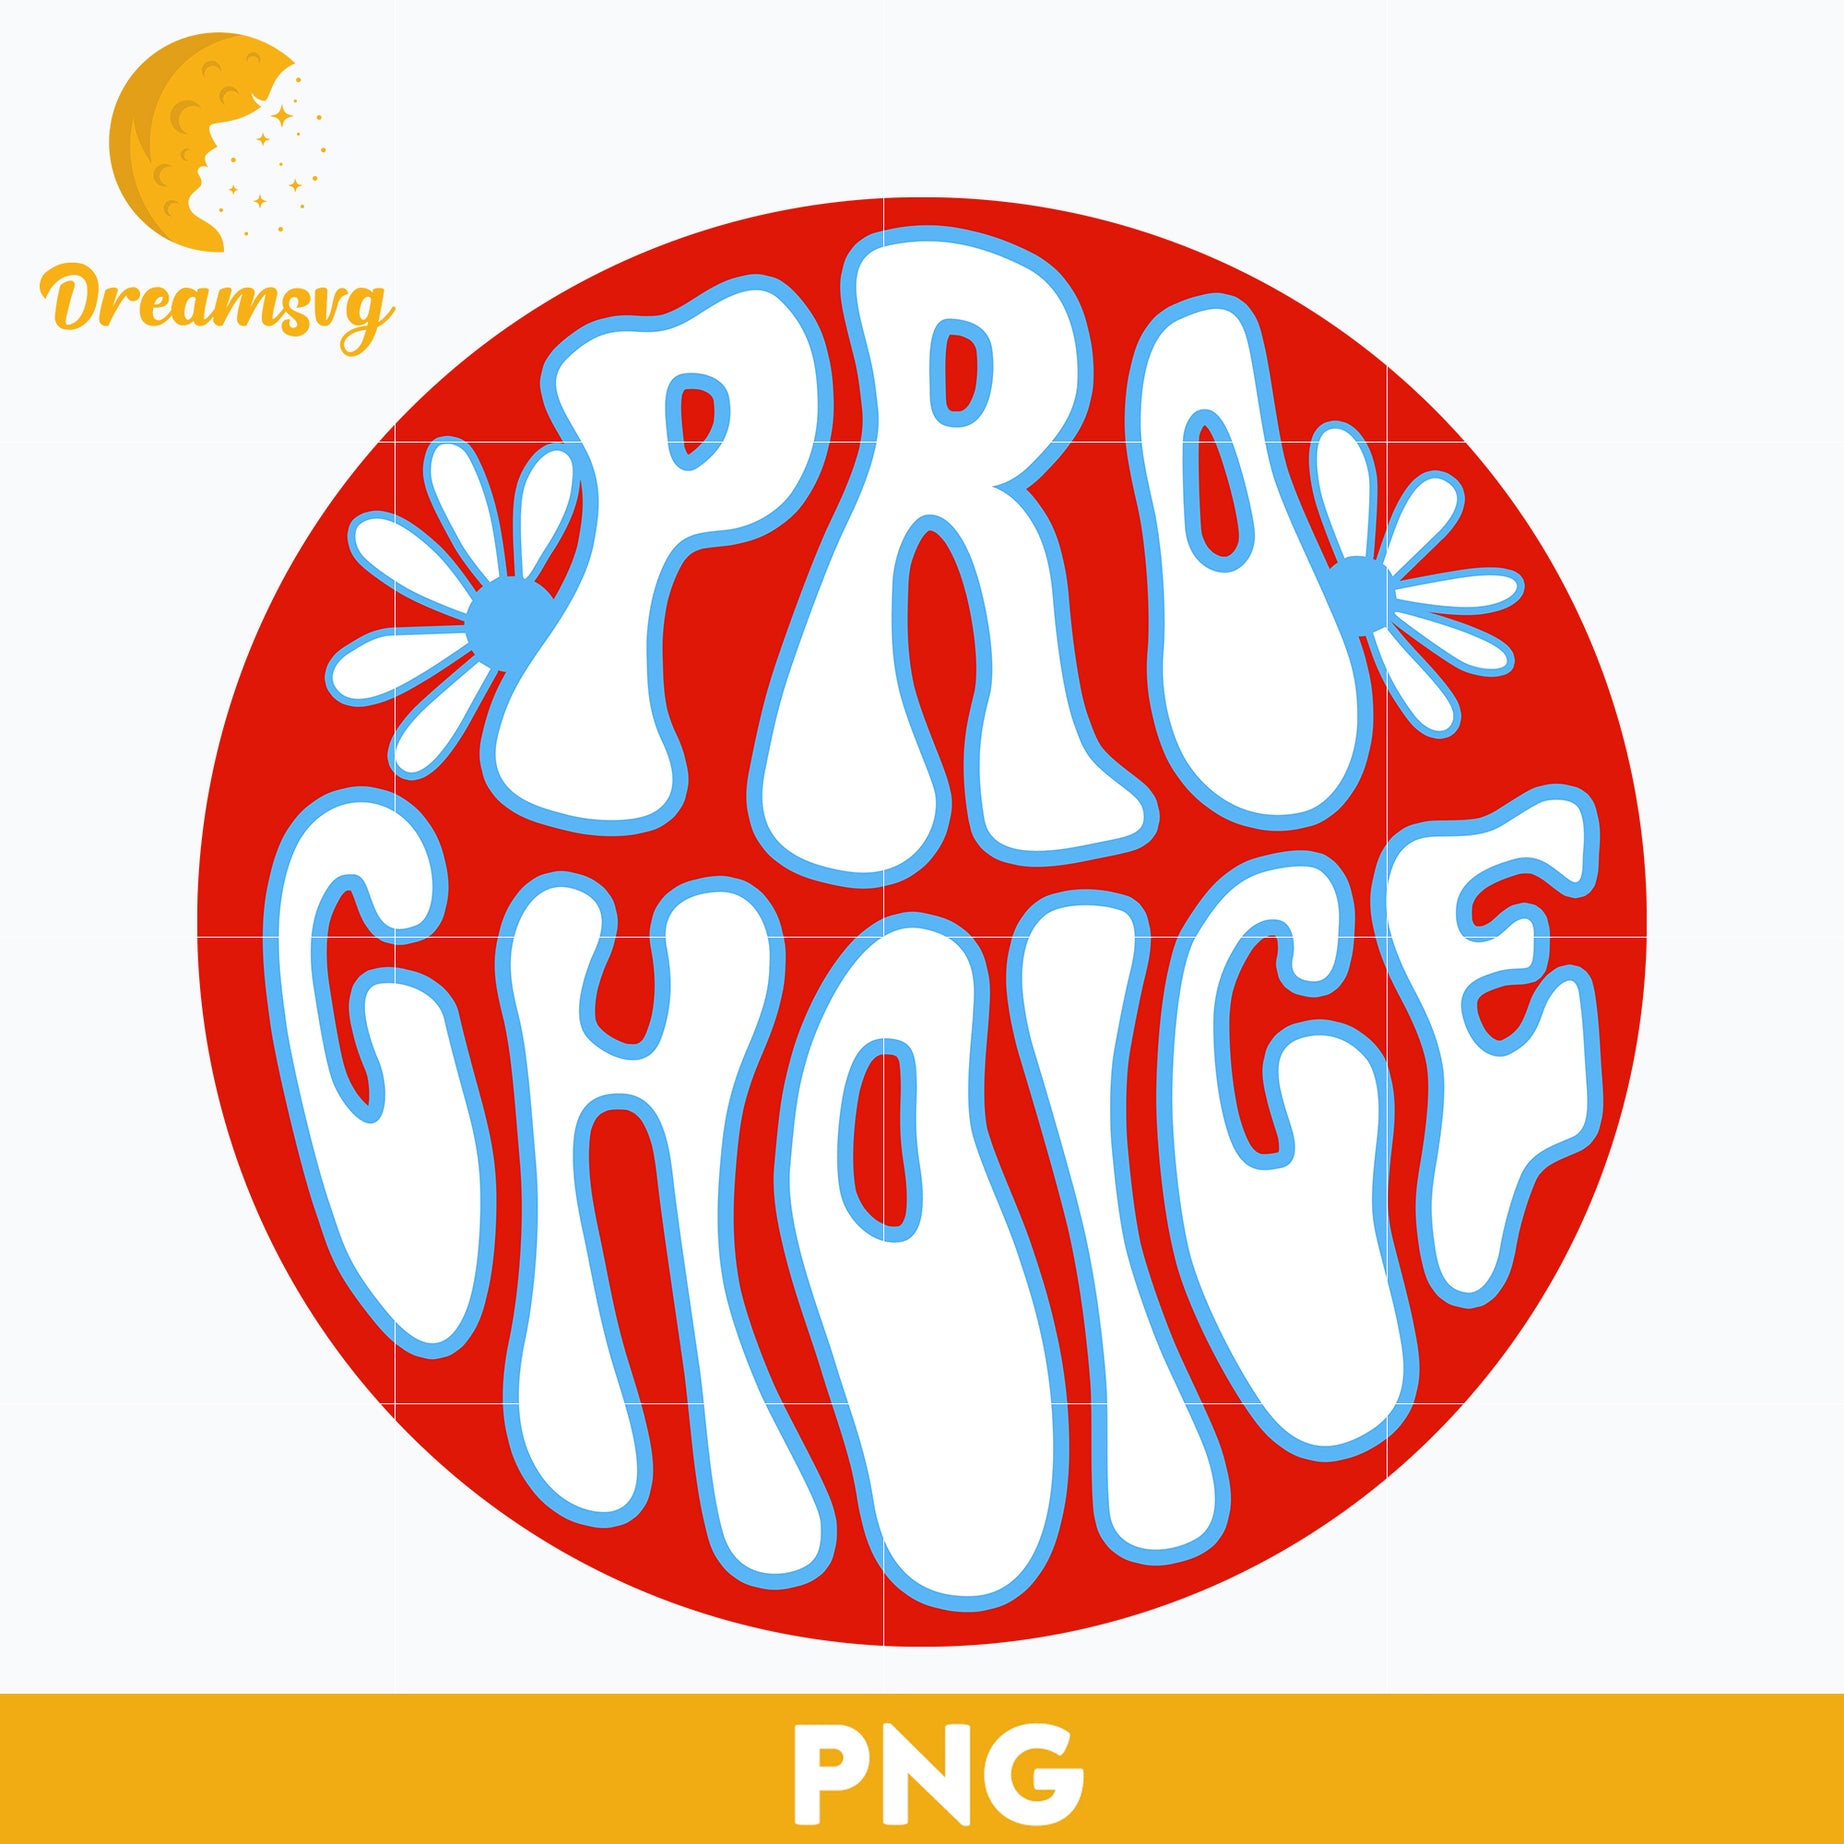 Choix pro Sticker PNG, Trending PNG, PNG file, Digital file.